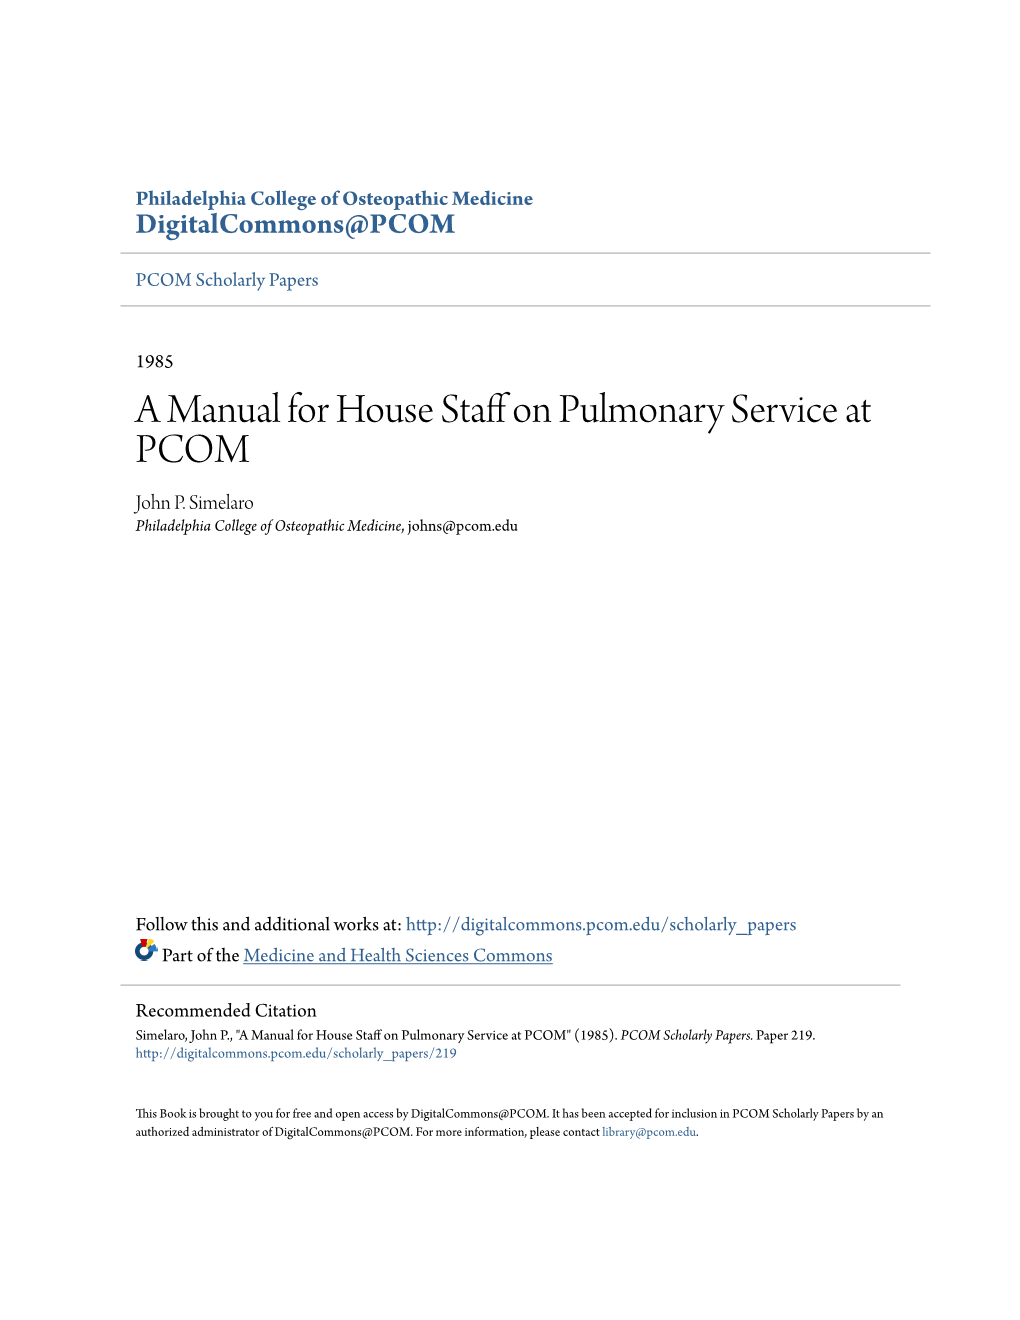 A Manual for House Staff on Pulmonary Service at PCOM John P